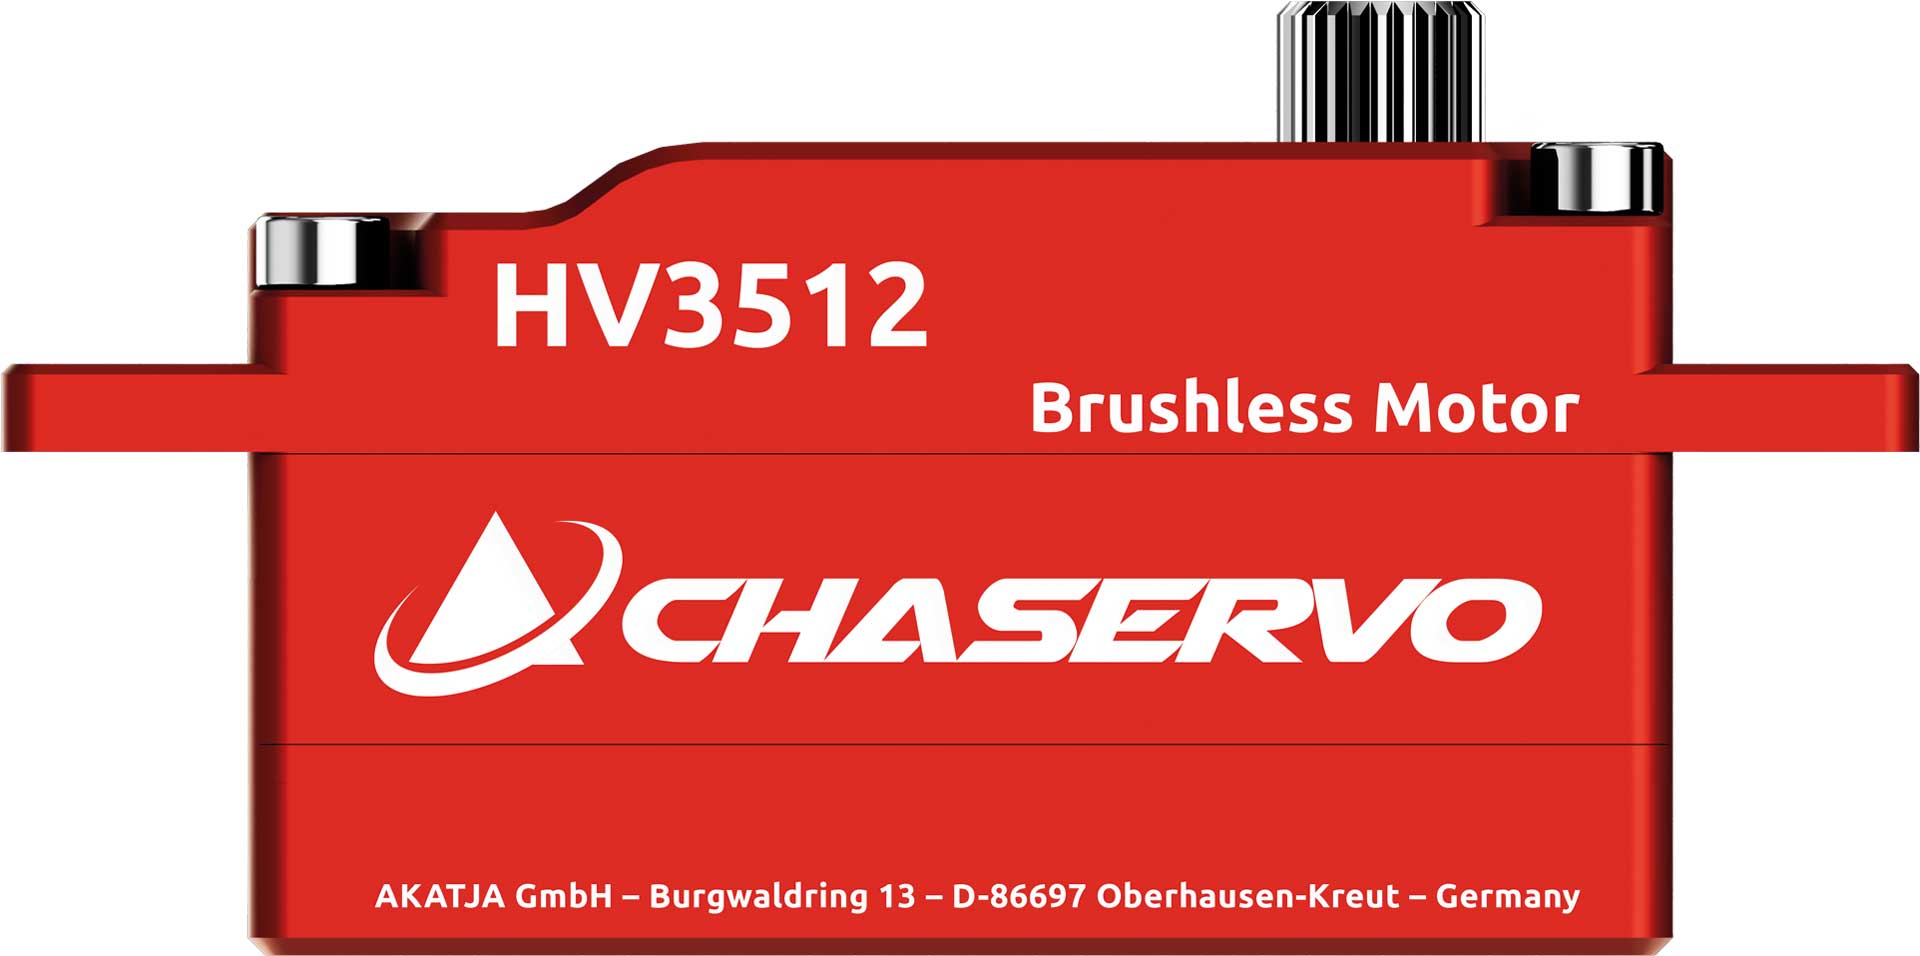 CHASERVO HV3512 25T low profile HV Brushless Servo